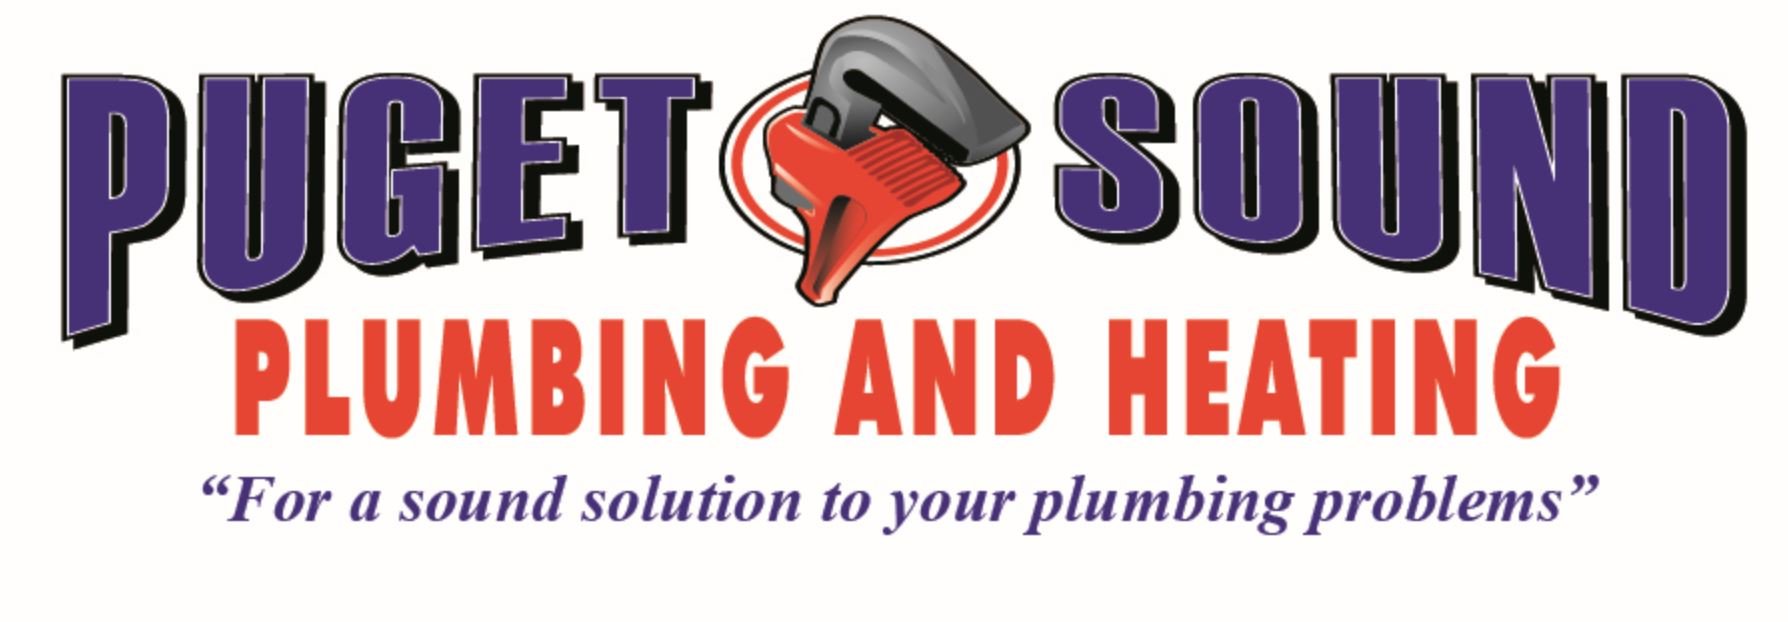 Puget Sound Plumbing and Heating, Inc. Logo